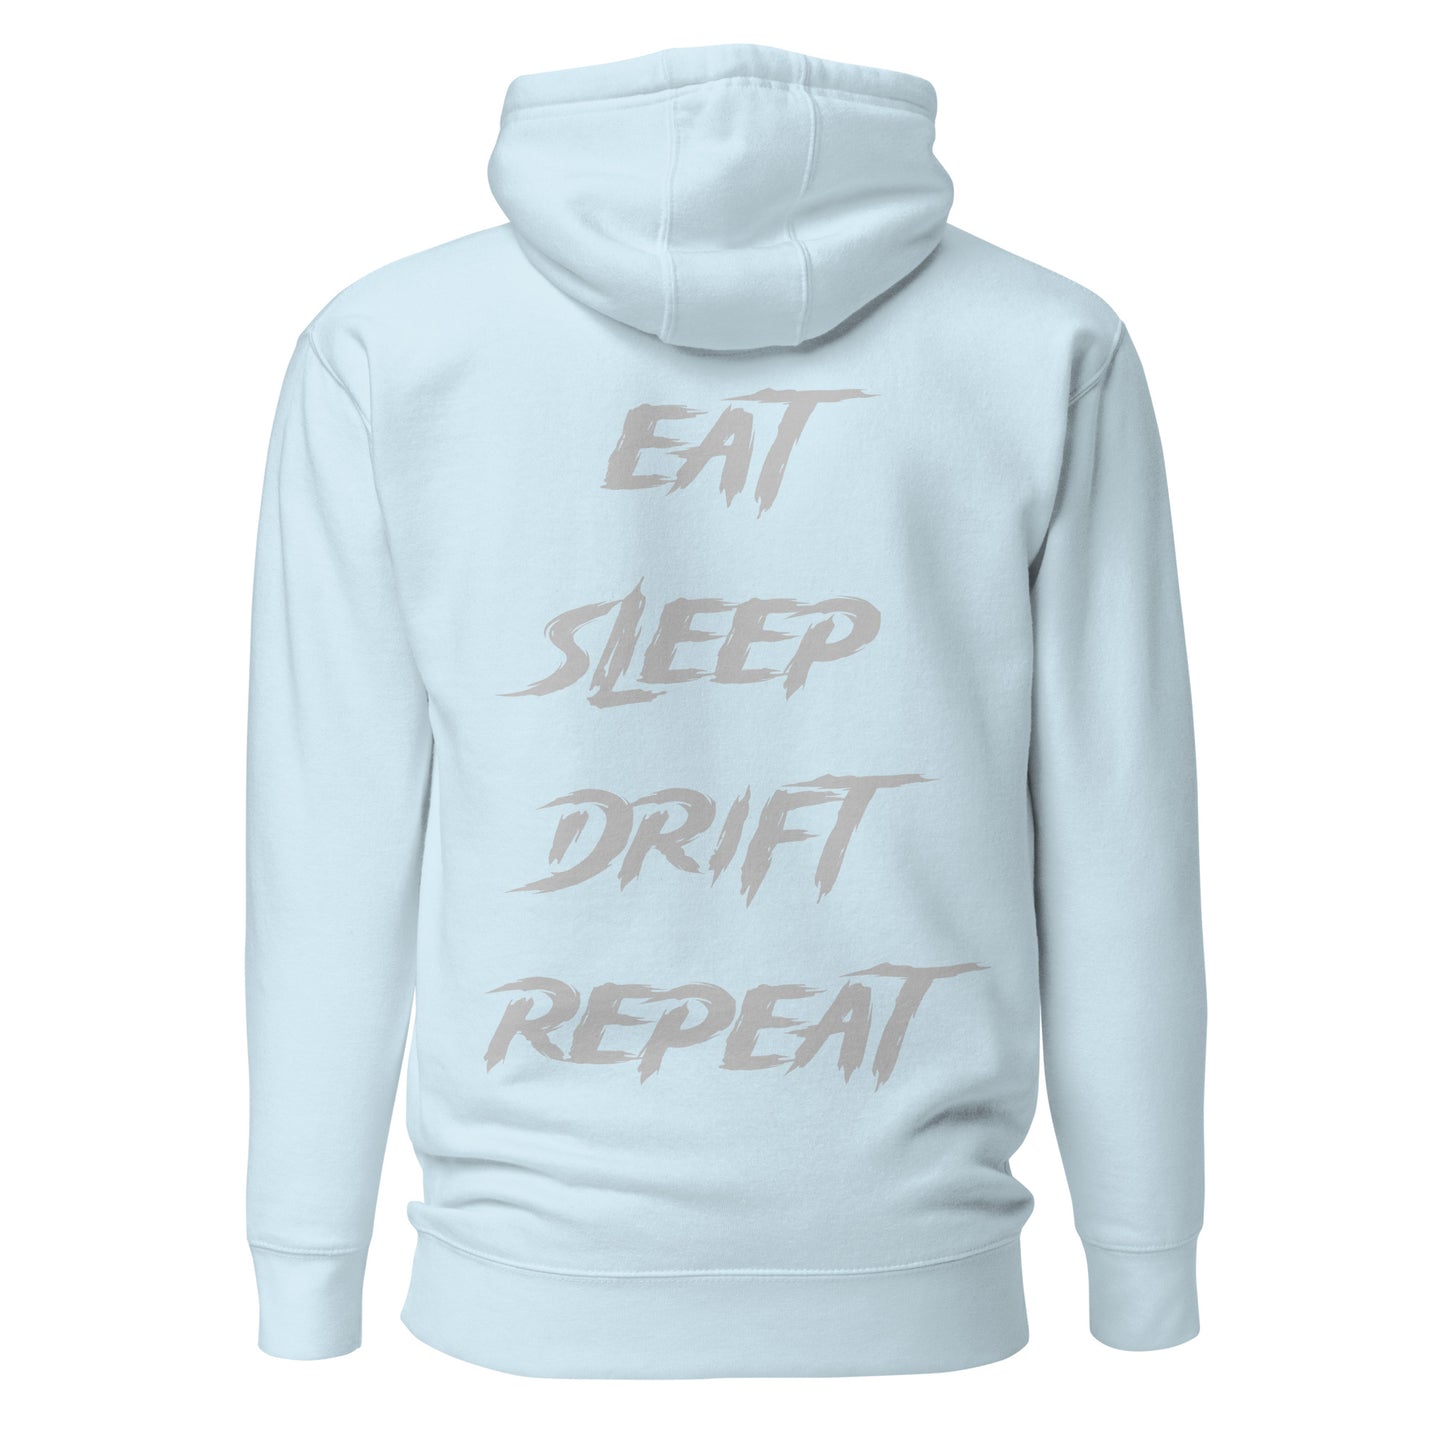 Eat Sleep Drift Repeat Silver